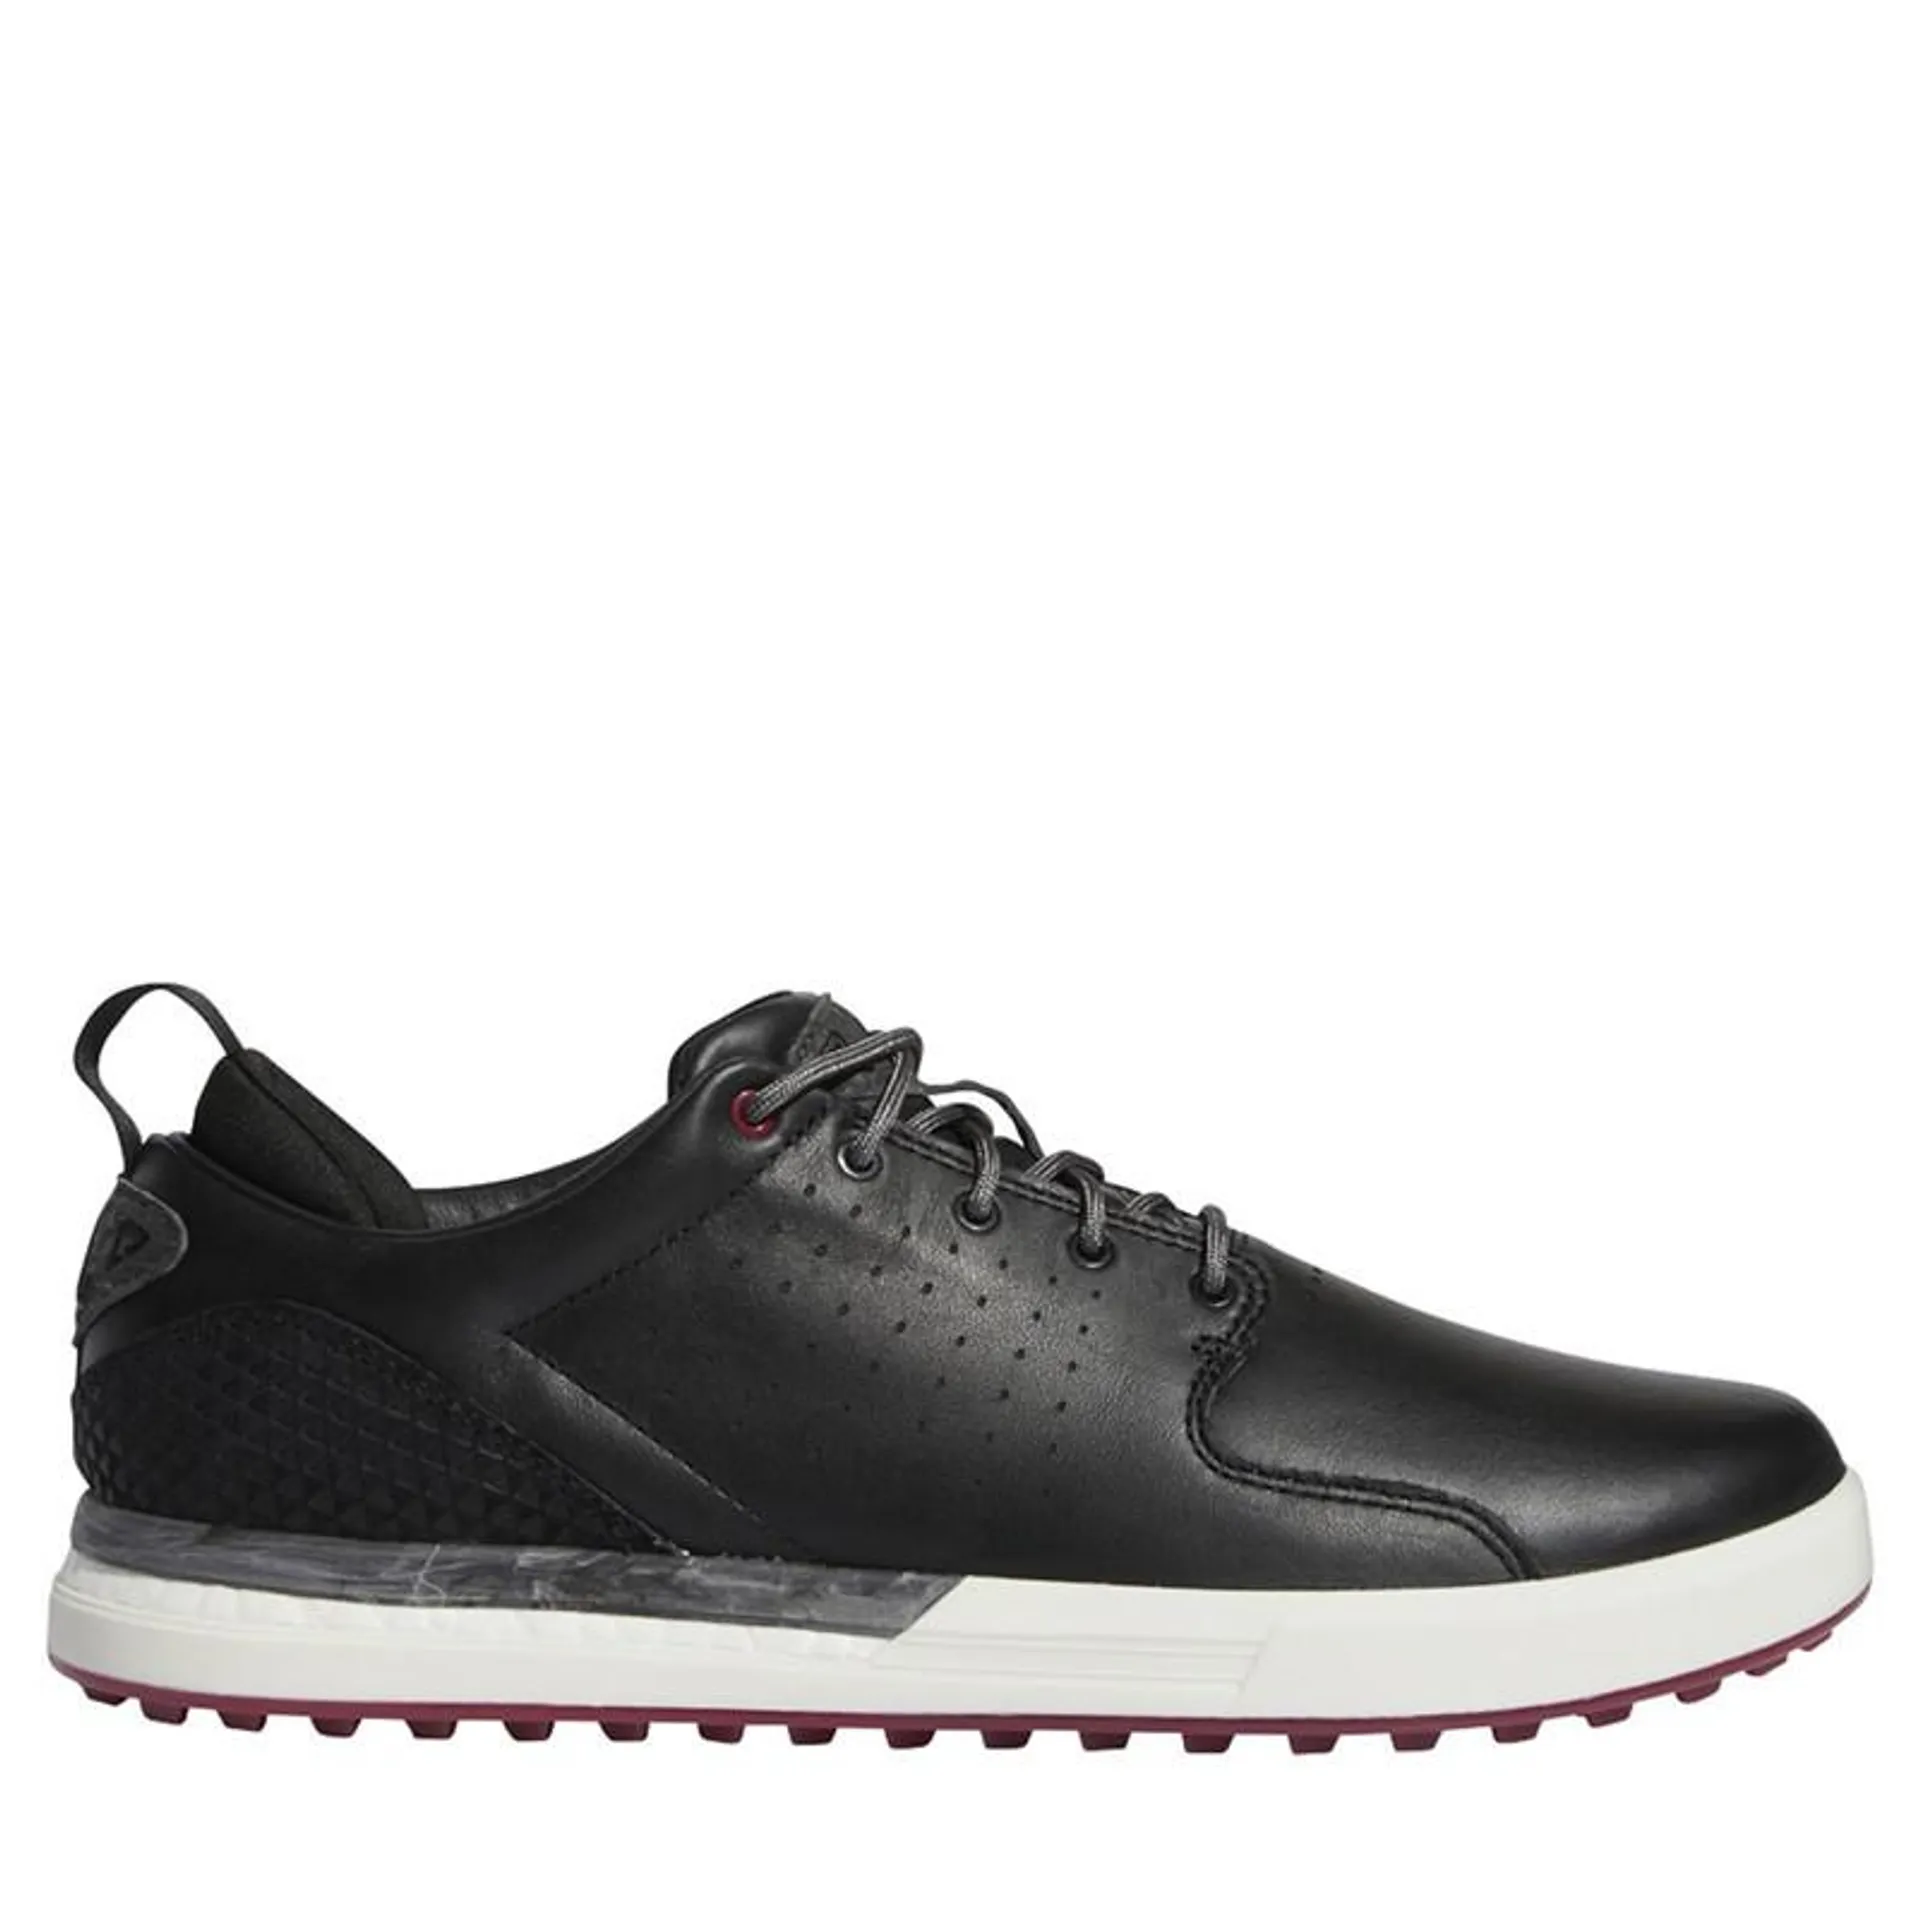 adidas Mens Flopshot Waterproof Spikeless Golf Shoes Cblack/Gresix/Legbur